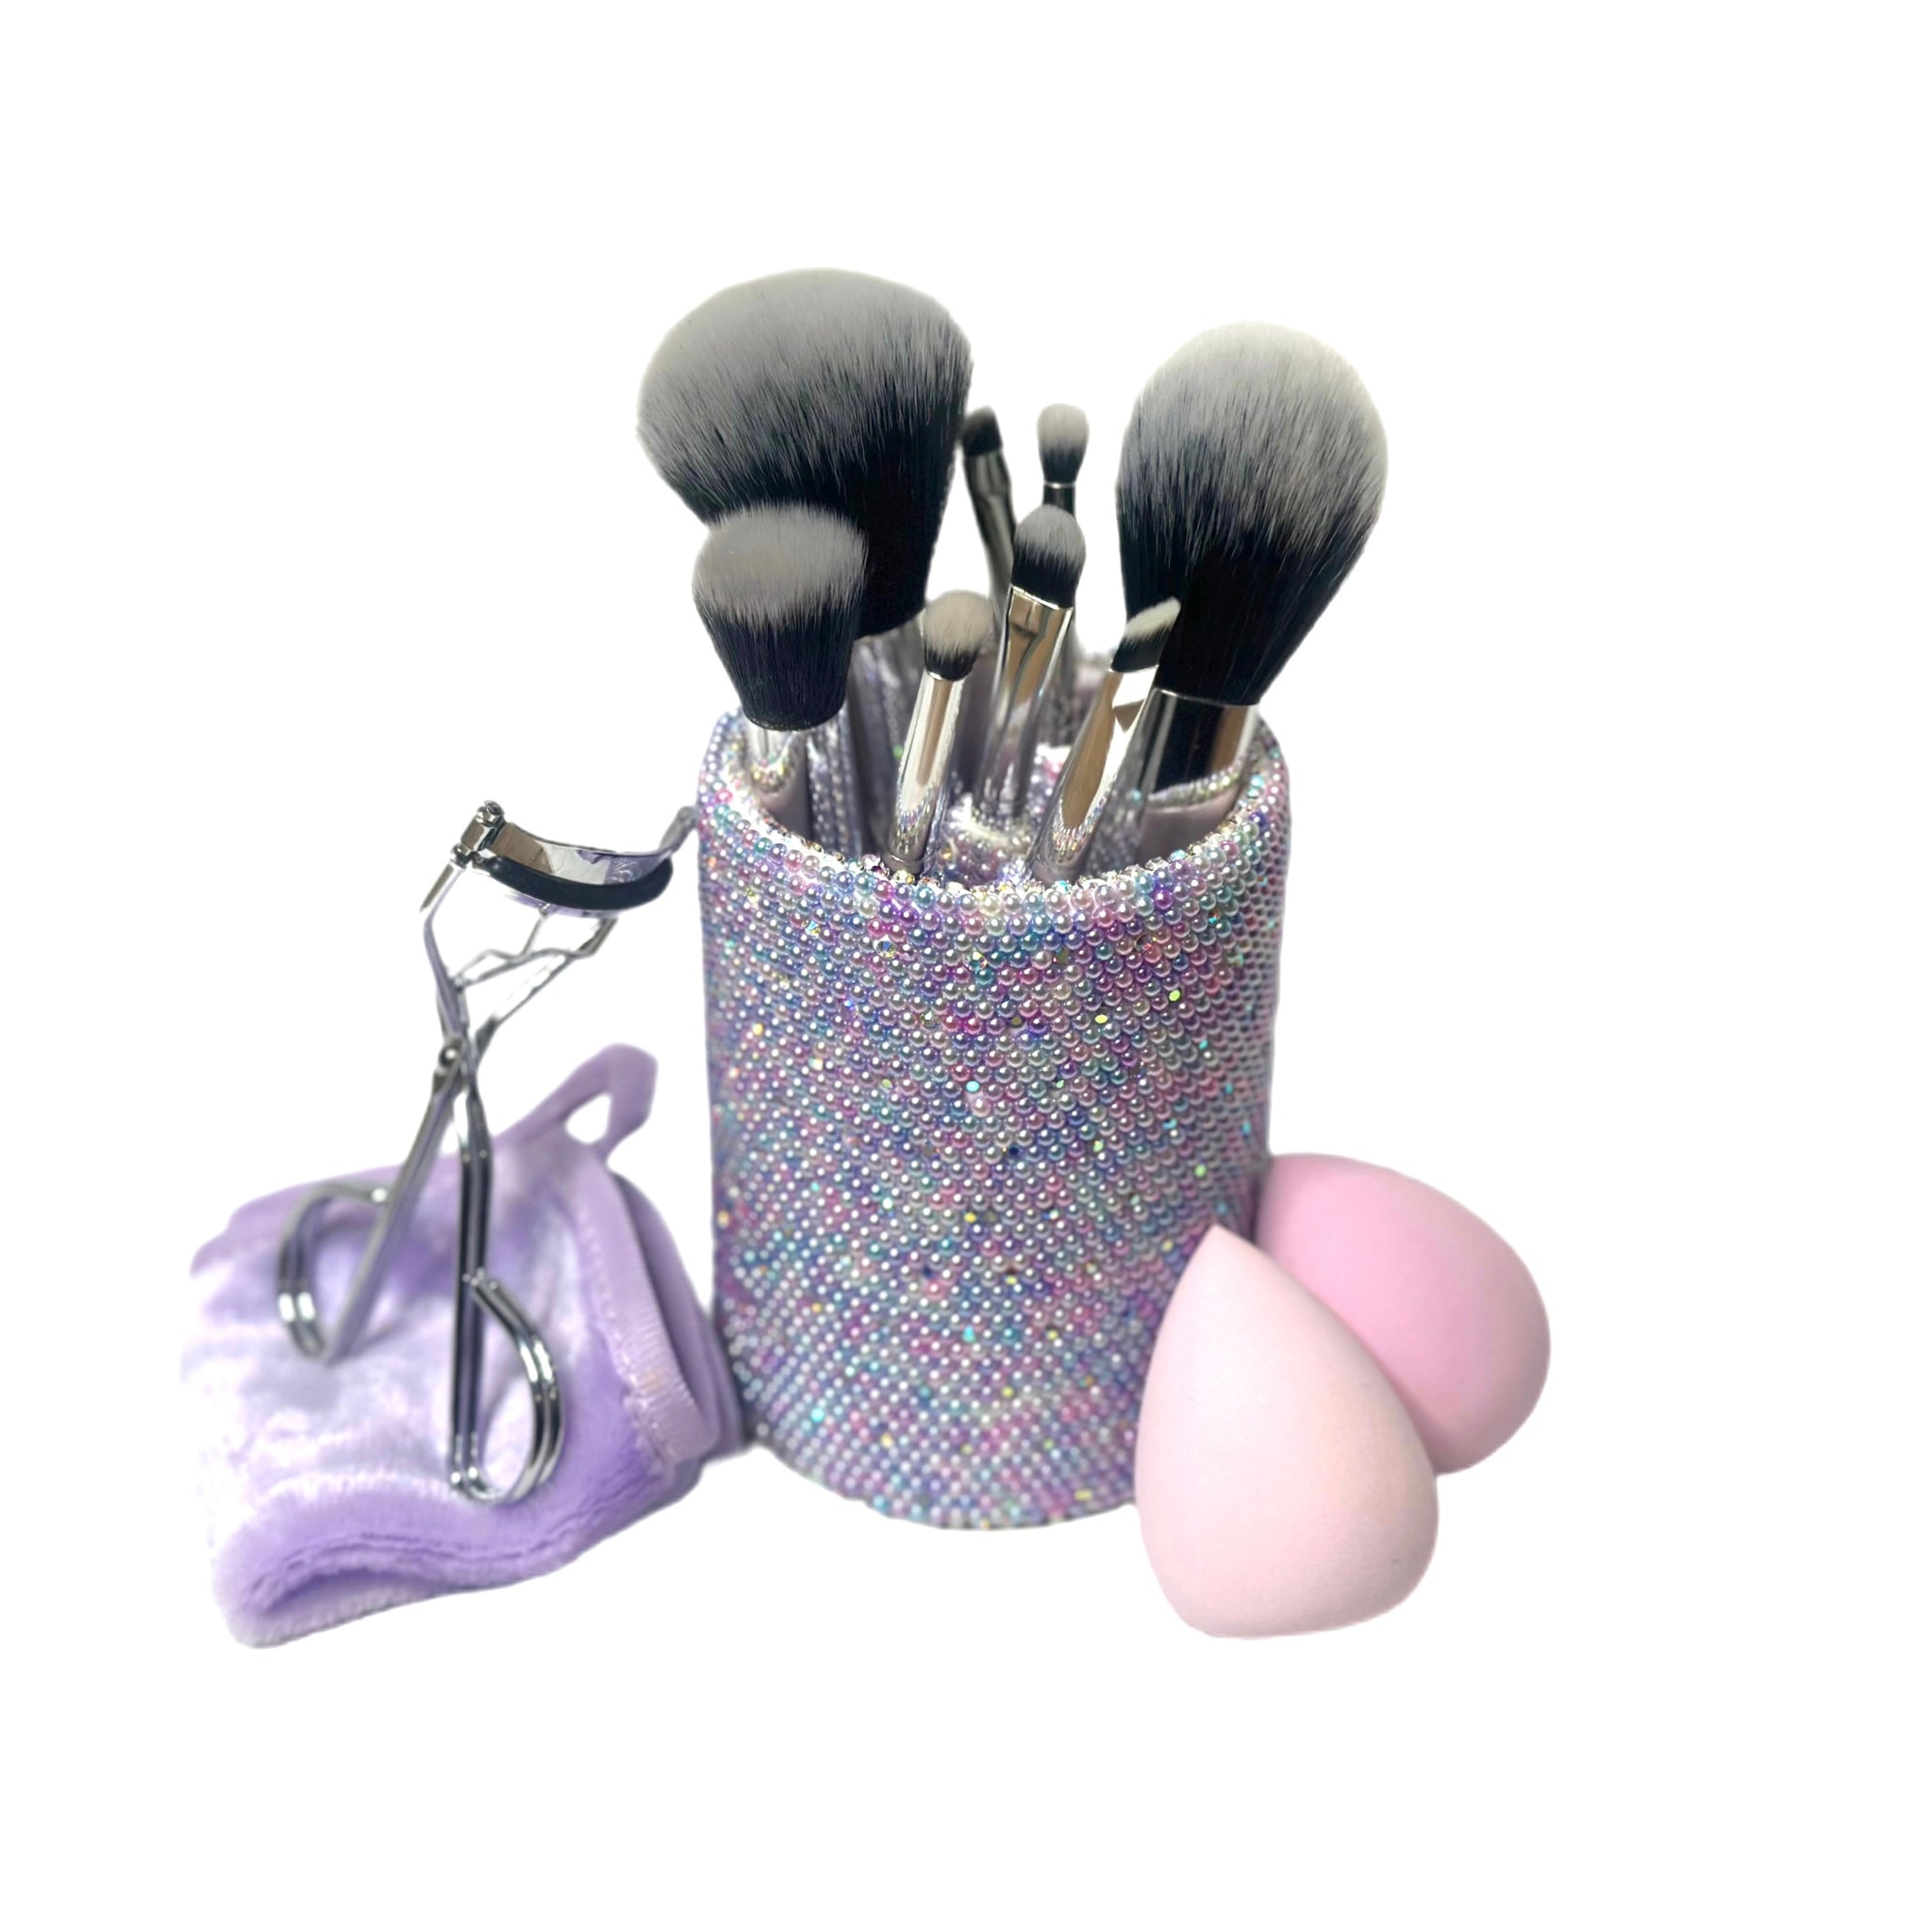 Glam Makeup & Brush Holders. Bling Jars For Makeup & Brushes